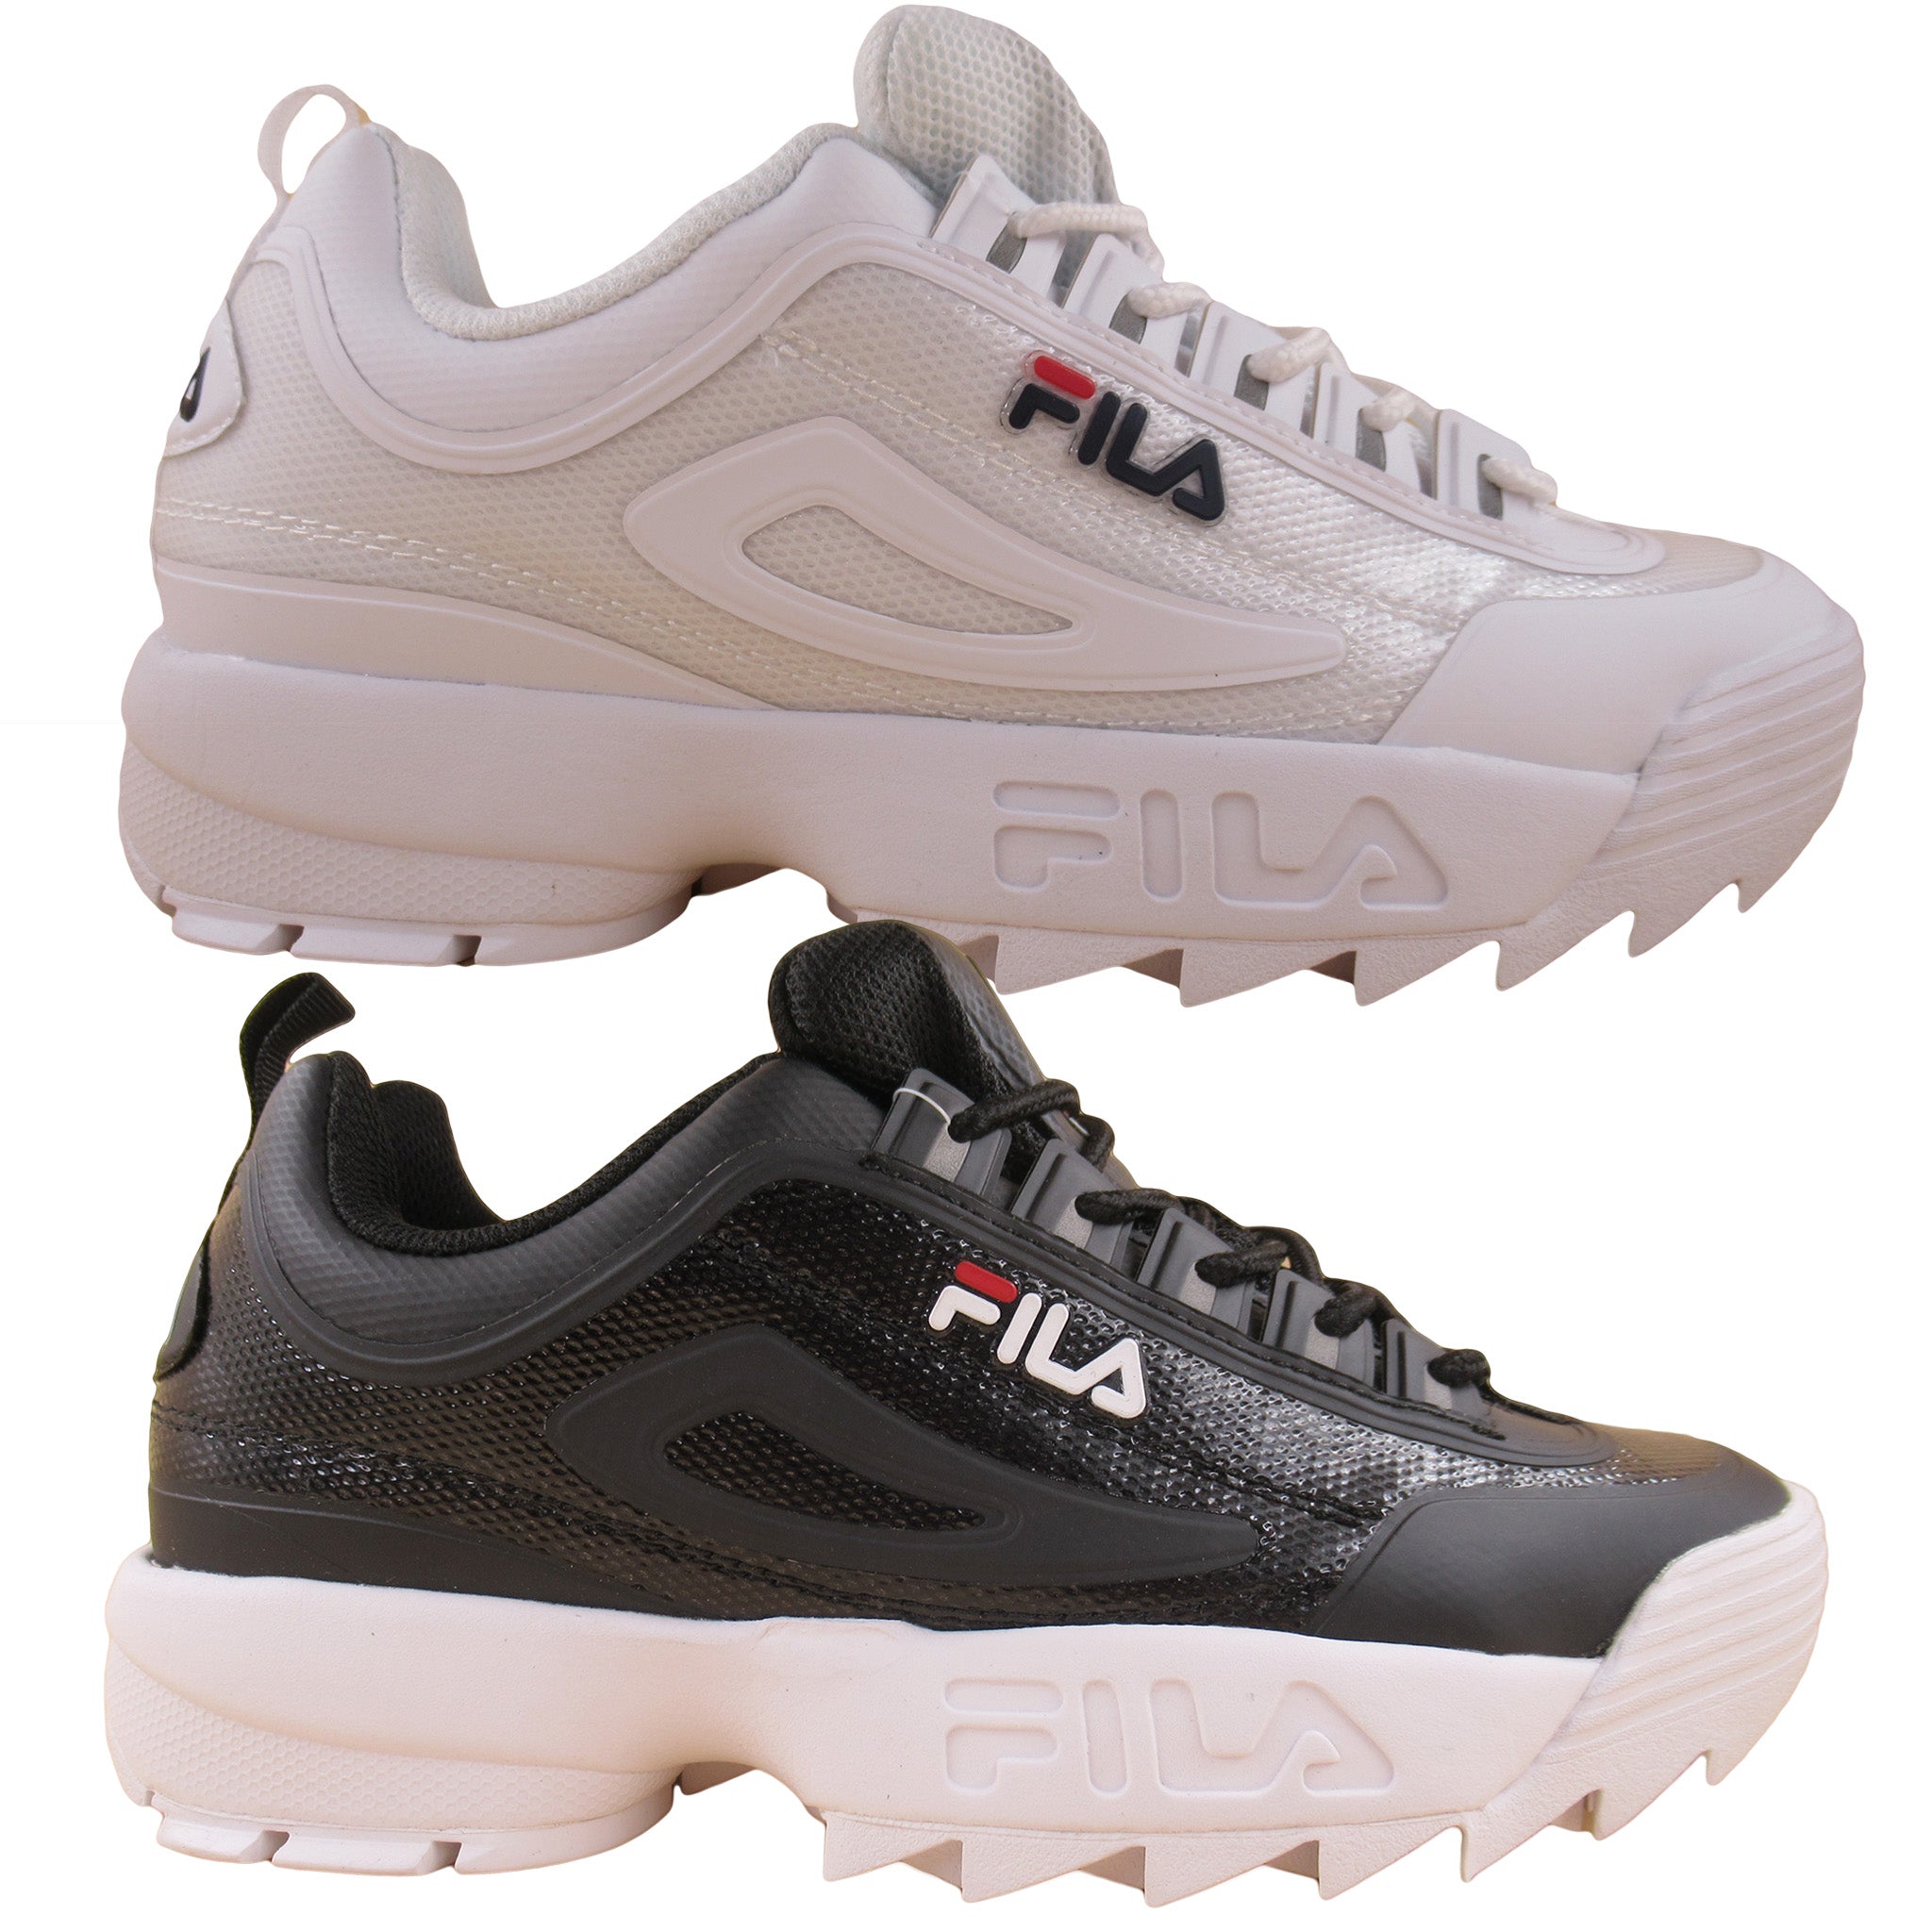 Fila Men's Disruptor II No-Sew Fashion Sneakers – That Shoe Store